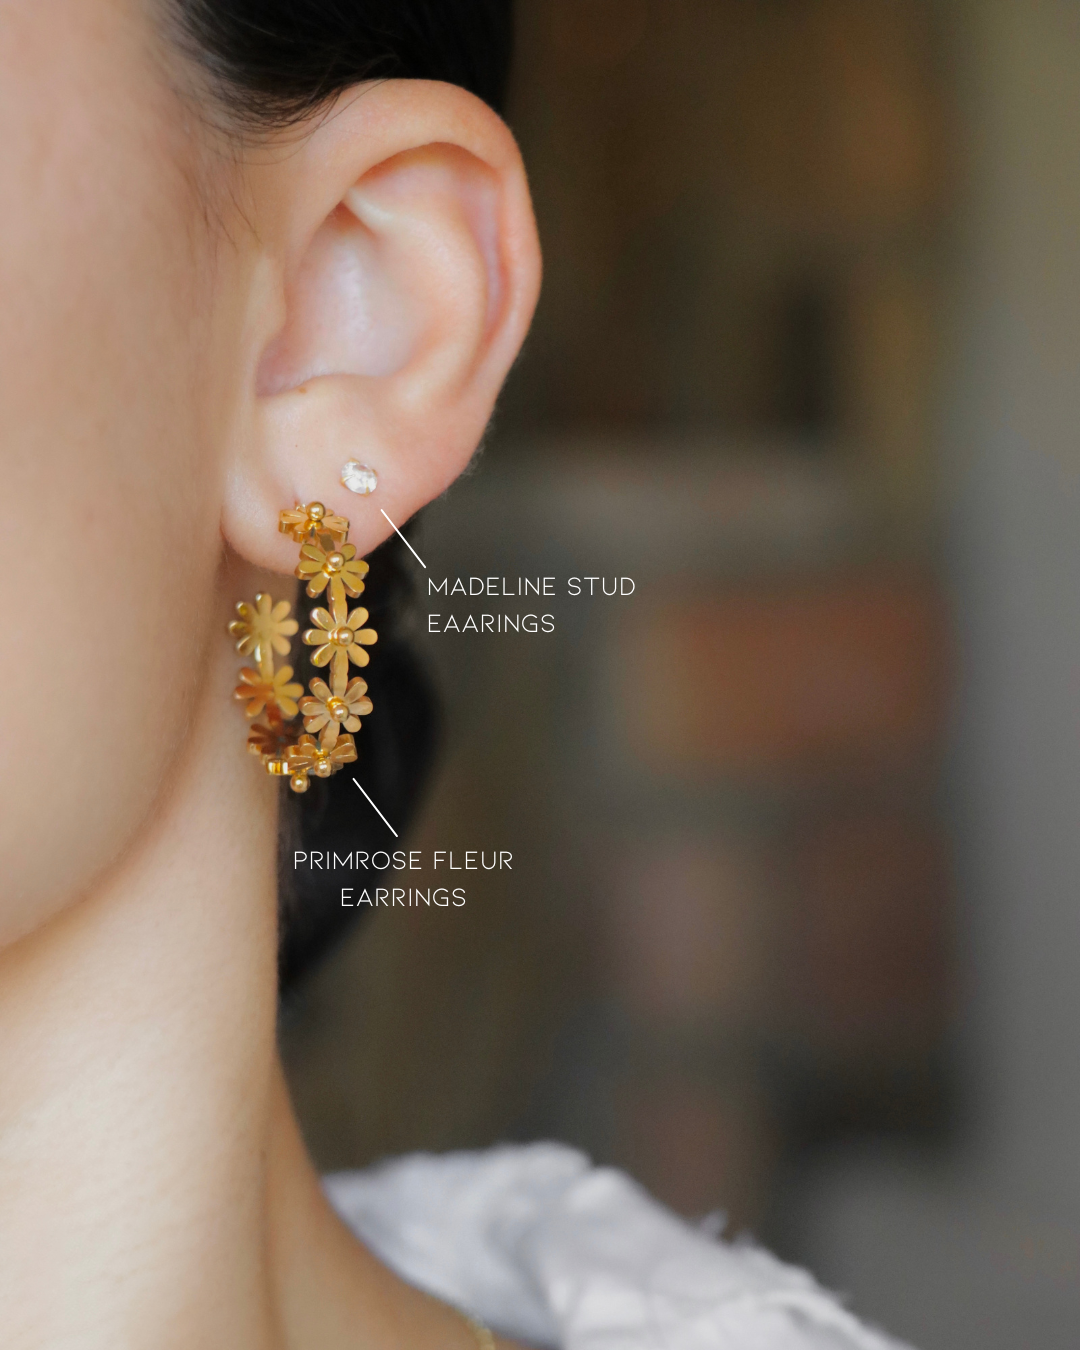 The Primrose Fleur Earrings